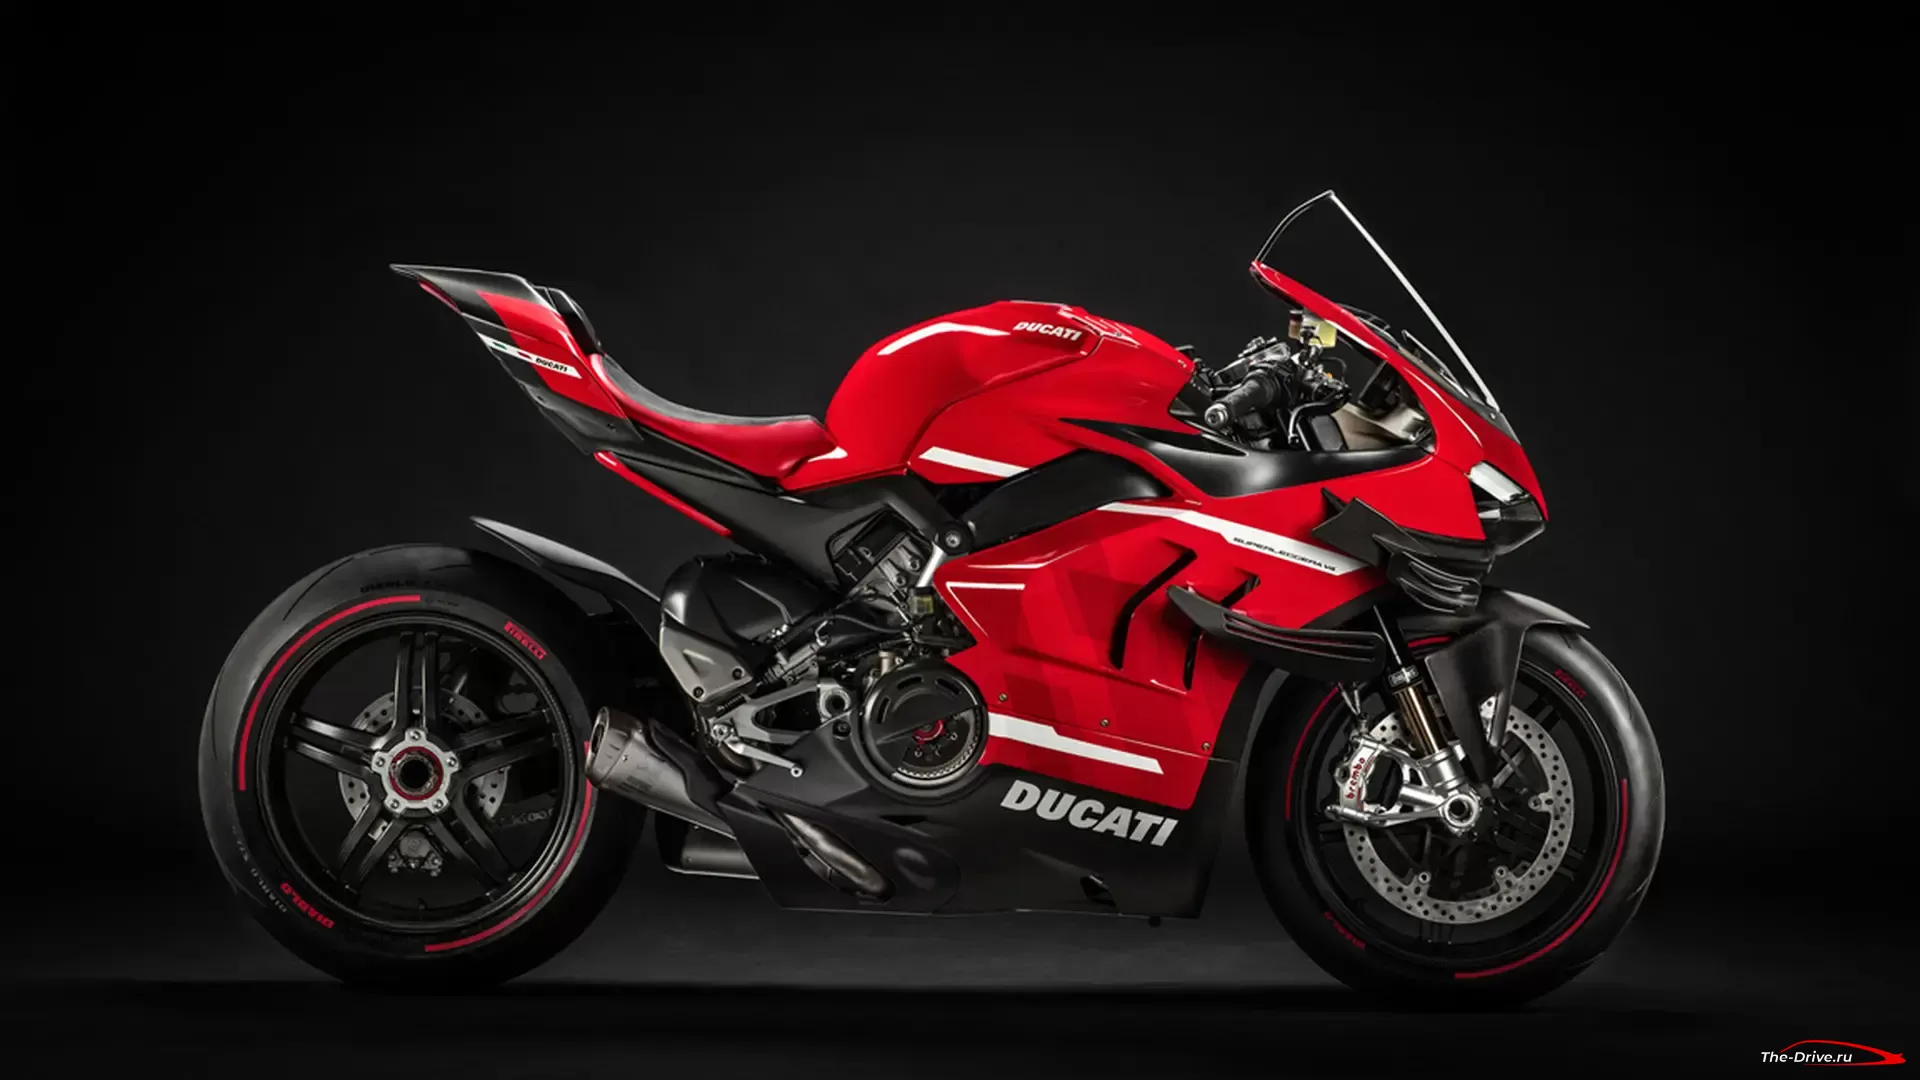 Ducati Superleggera V4 - карбоновая ракета мощностью 230 л.с.